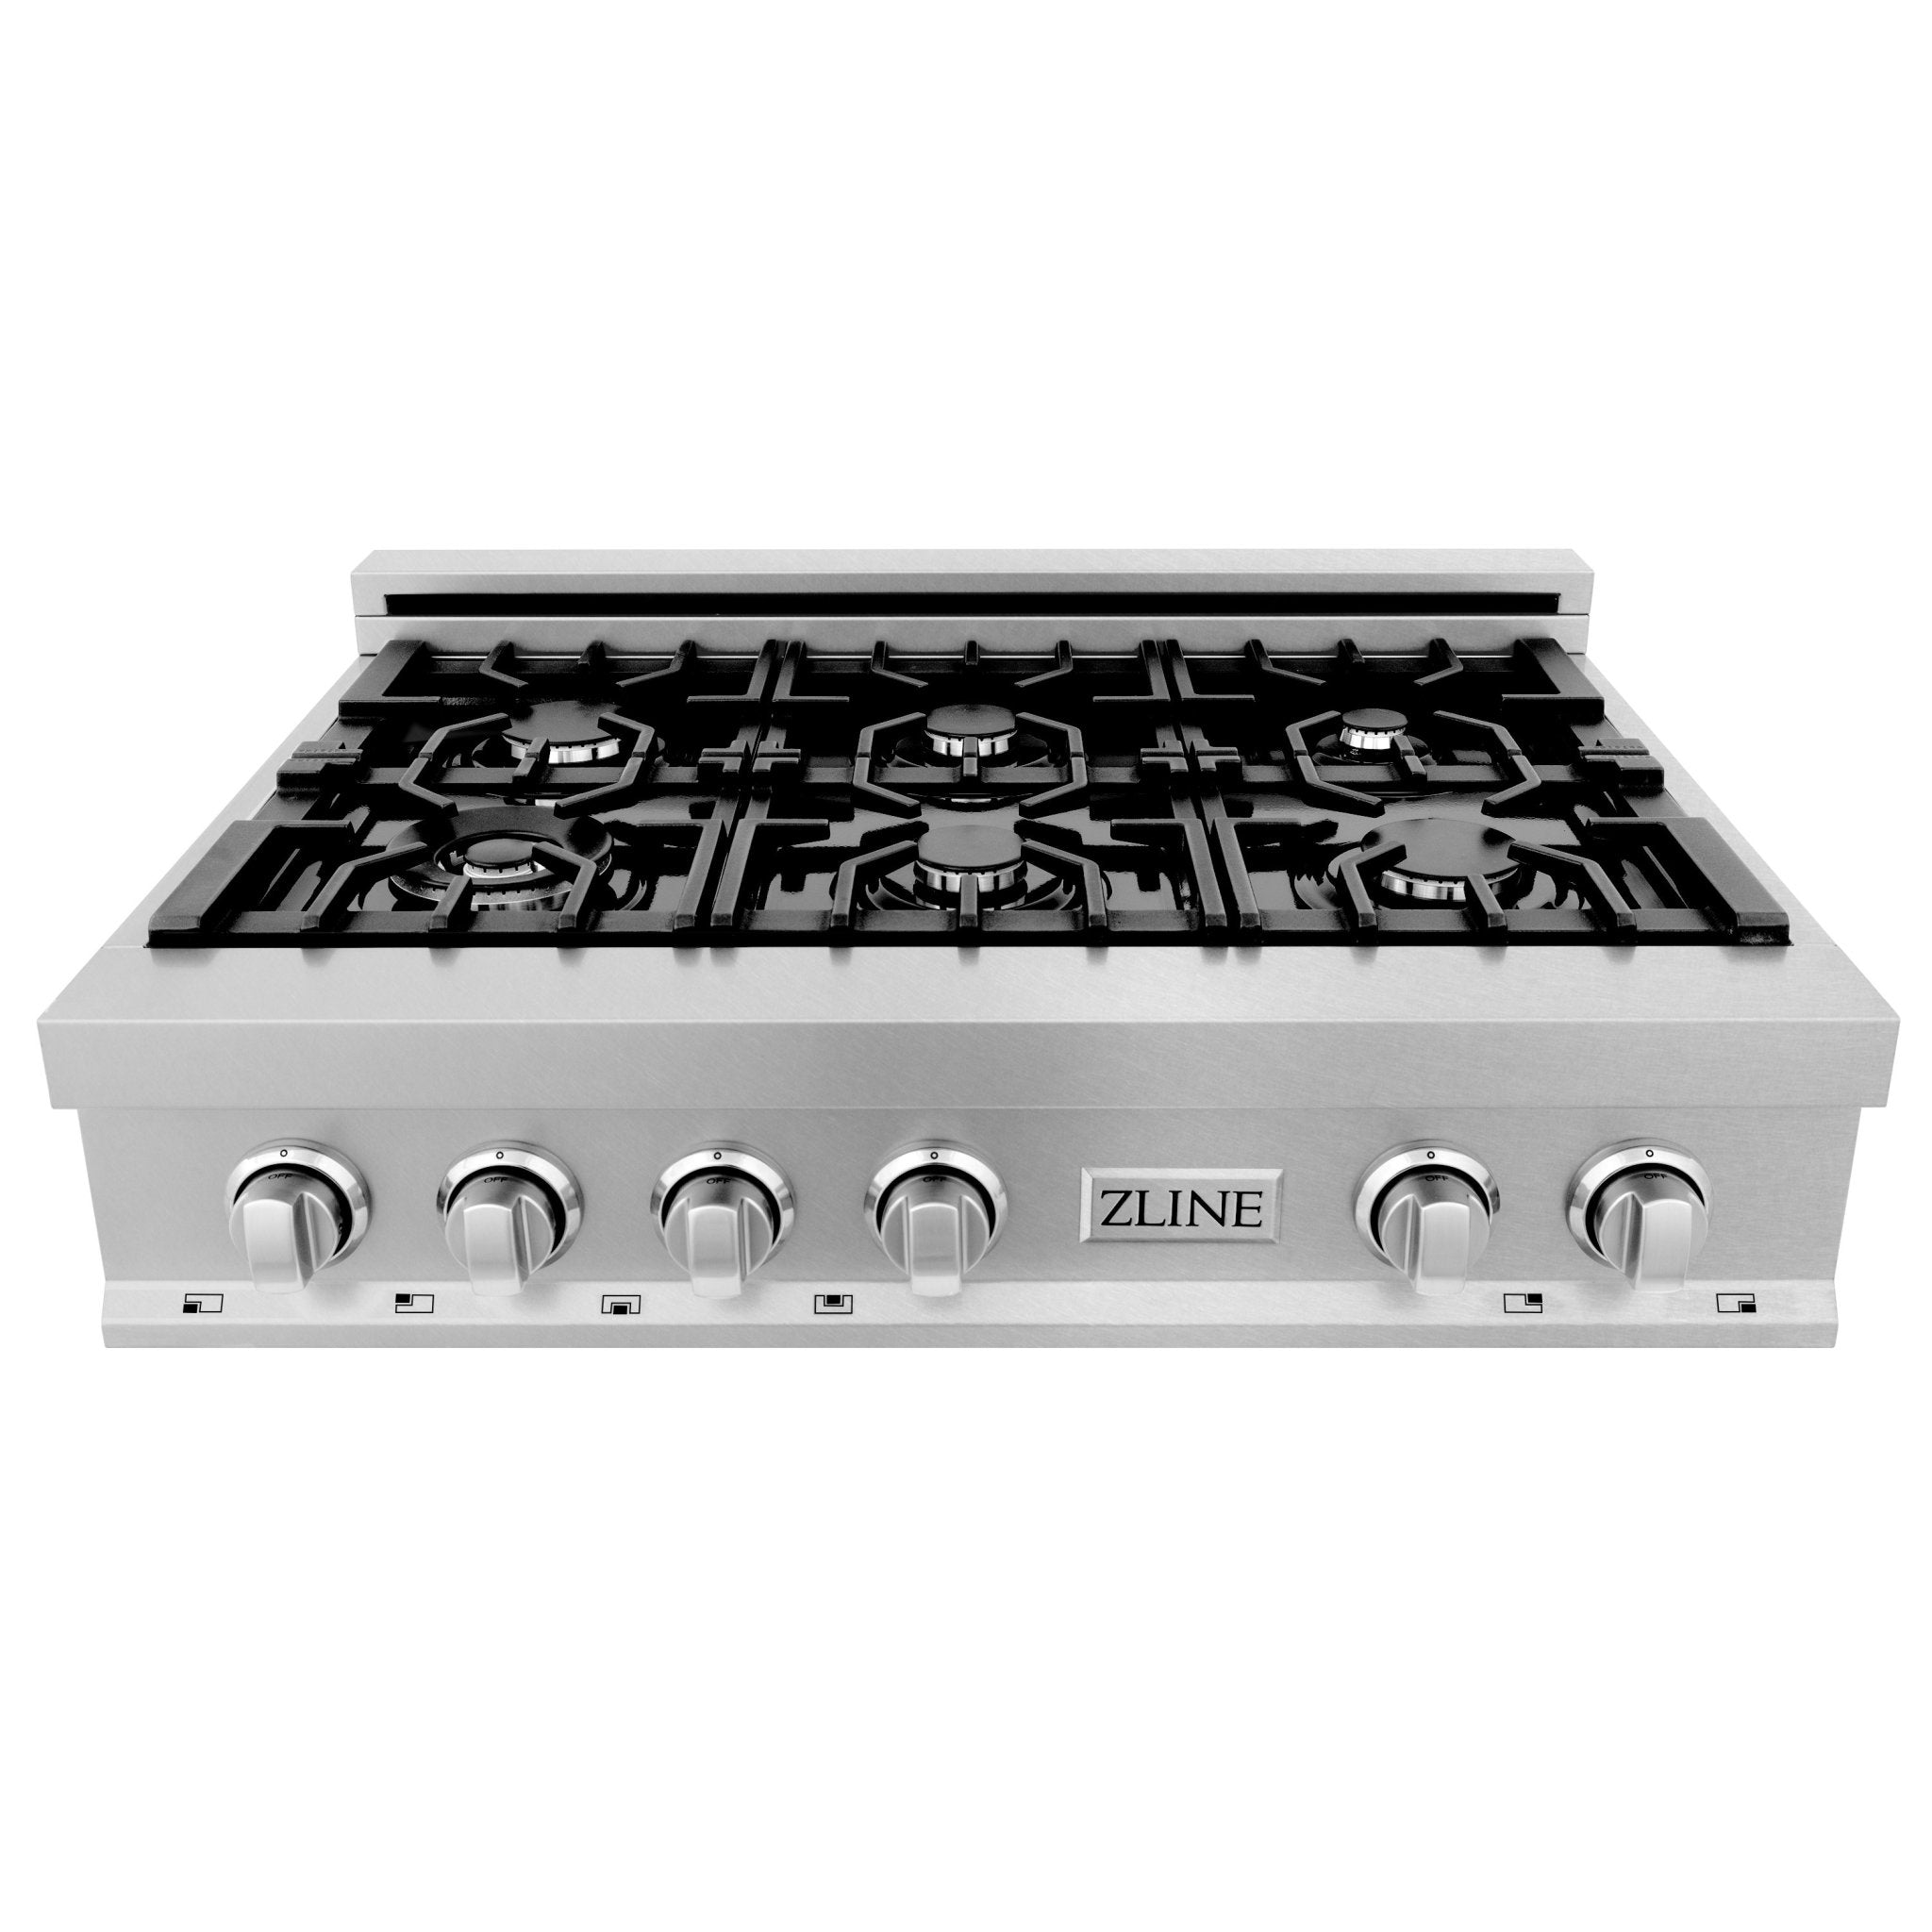 ZLINE Kitchen and Bath, ZLINE 36" Porcelain Rangetop in DuraSnow® Stainless Steel with 6 Gas Burners (RTS-36), RTS-36,